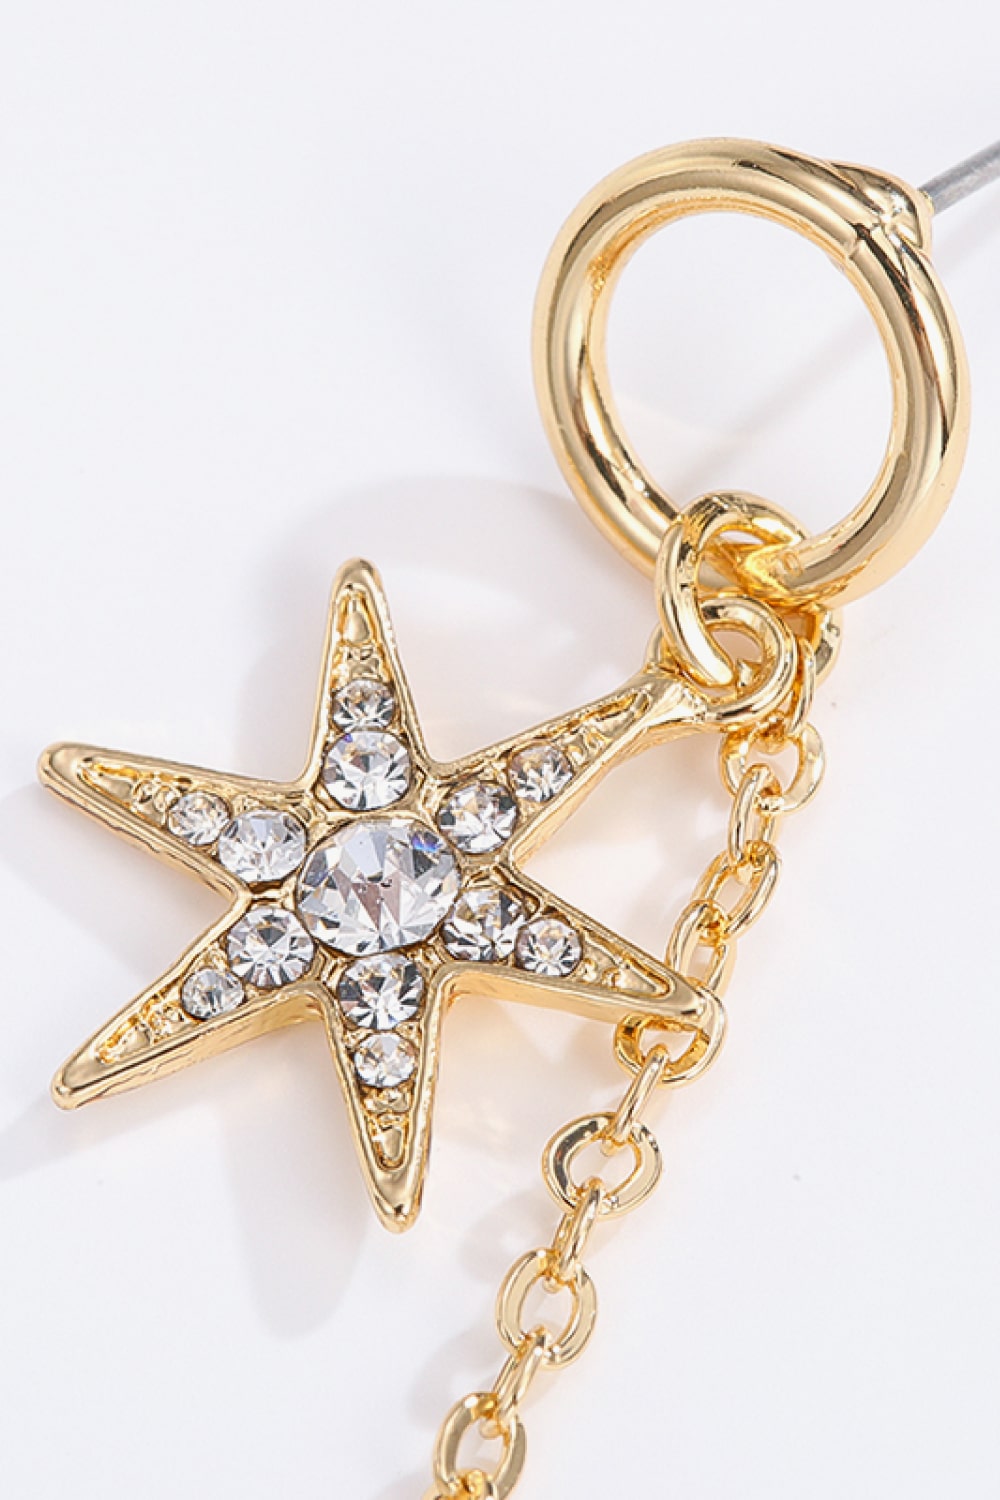 Sparkling Inlaid Rhinestone Encrusted Star & Moon Celestial Earrings